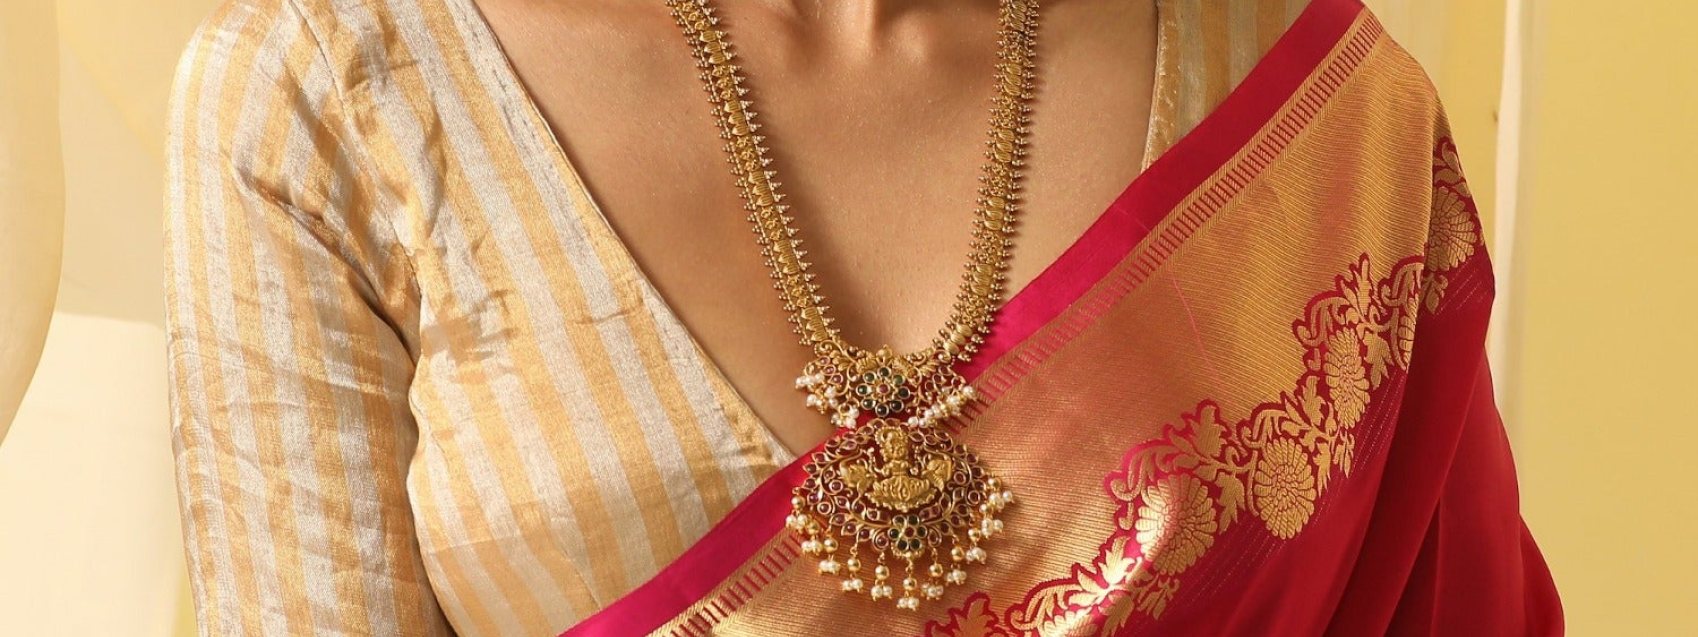 model wearing long ornate necklace